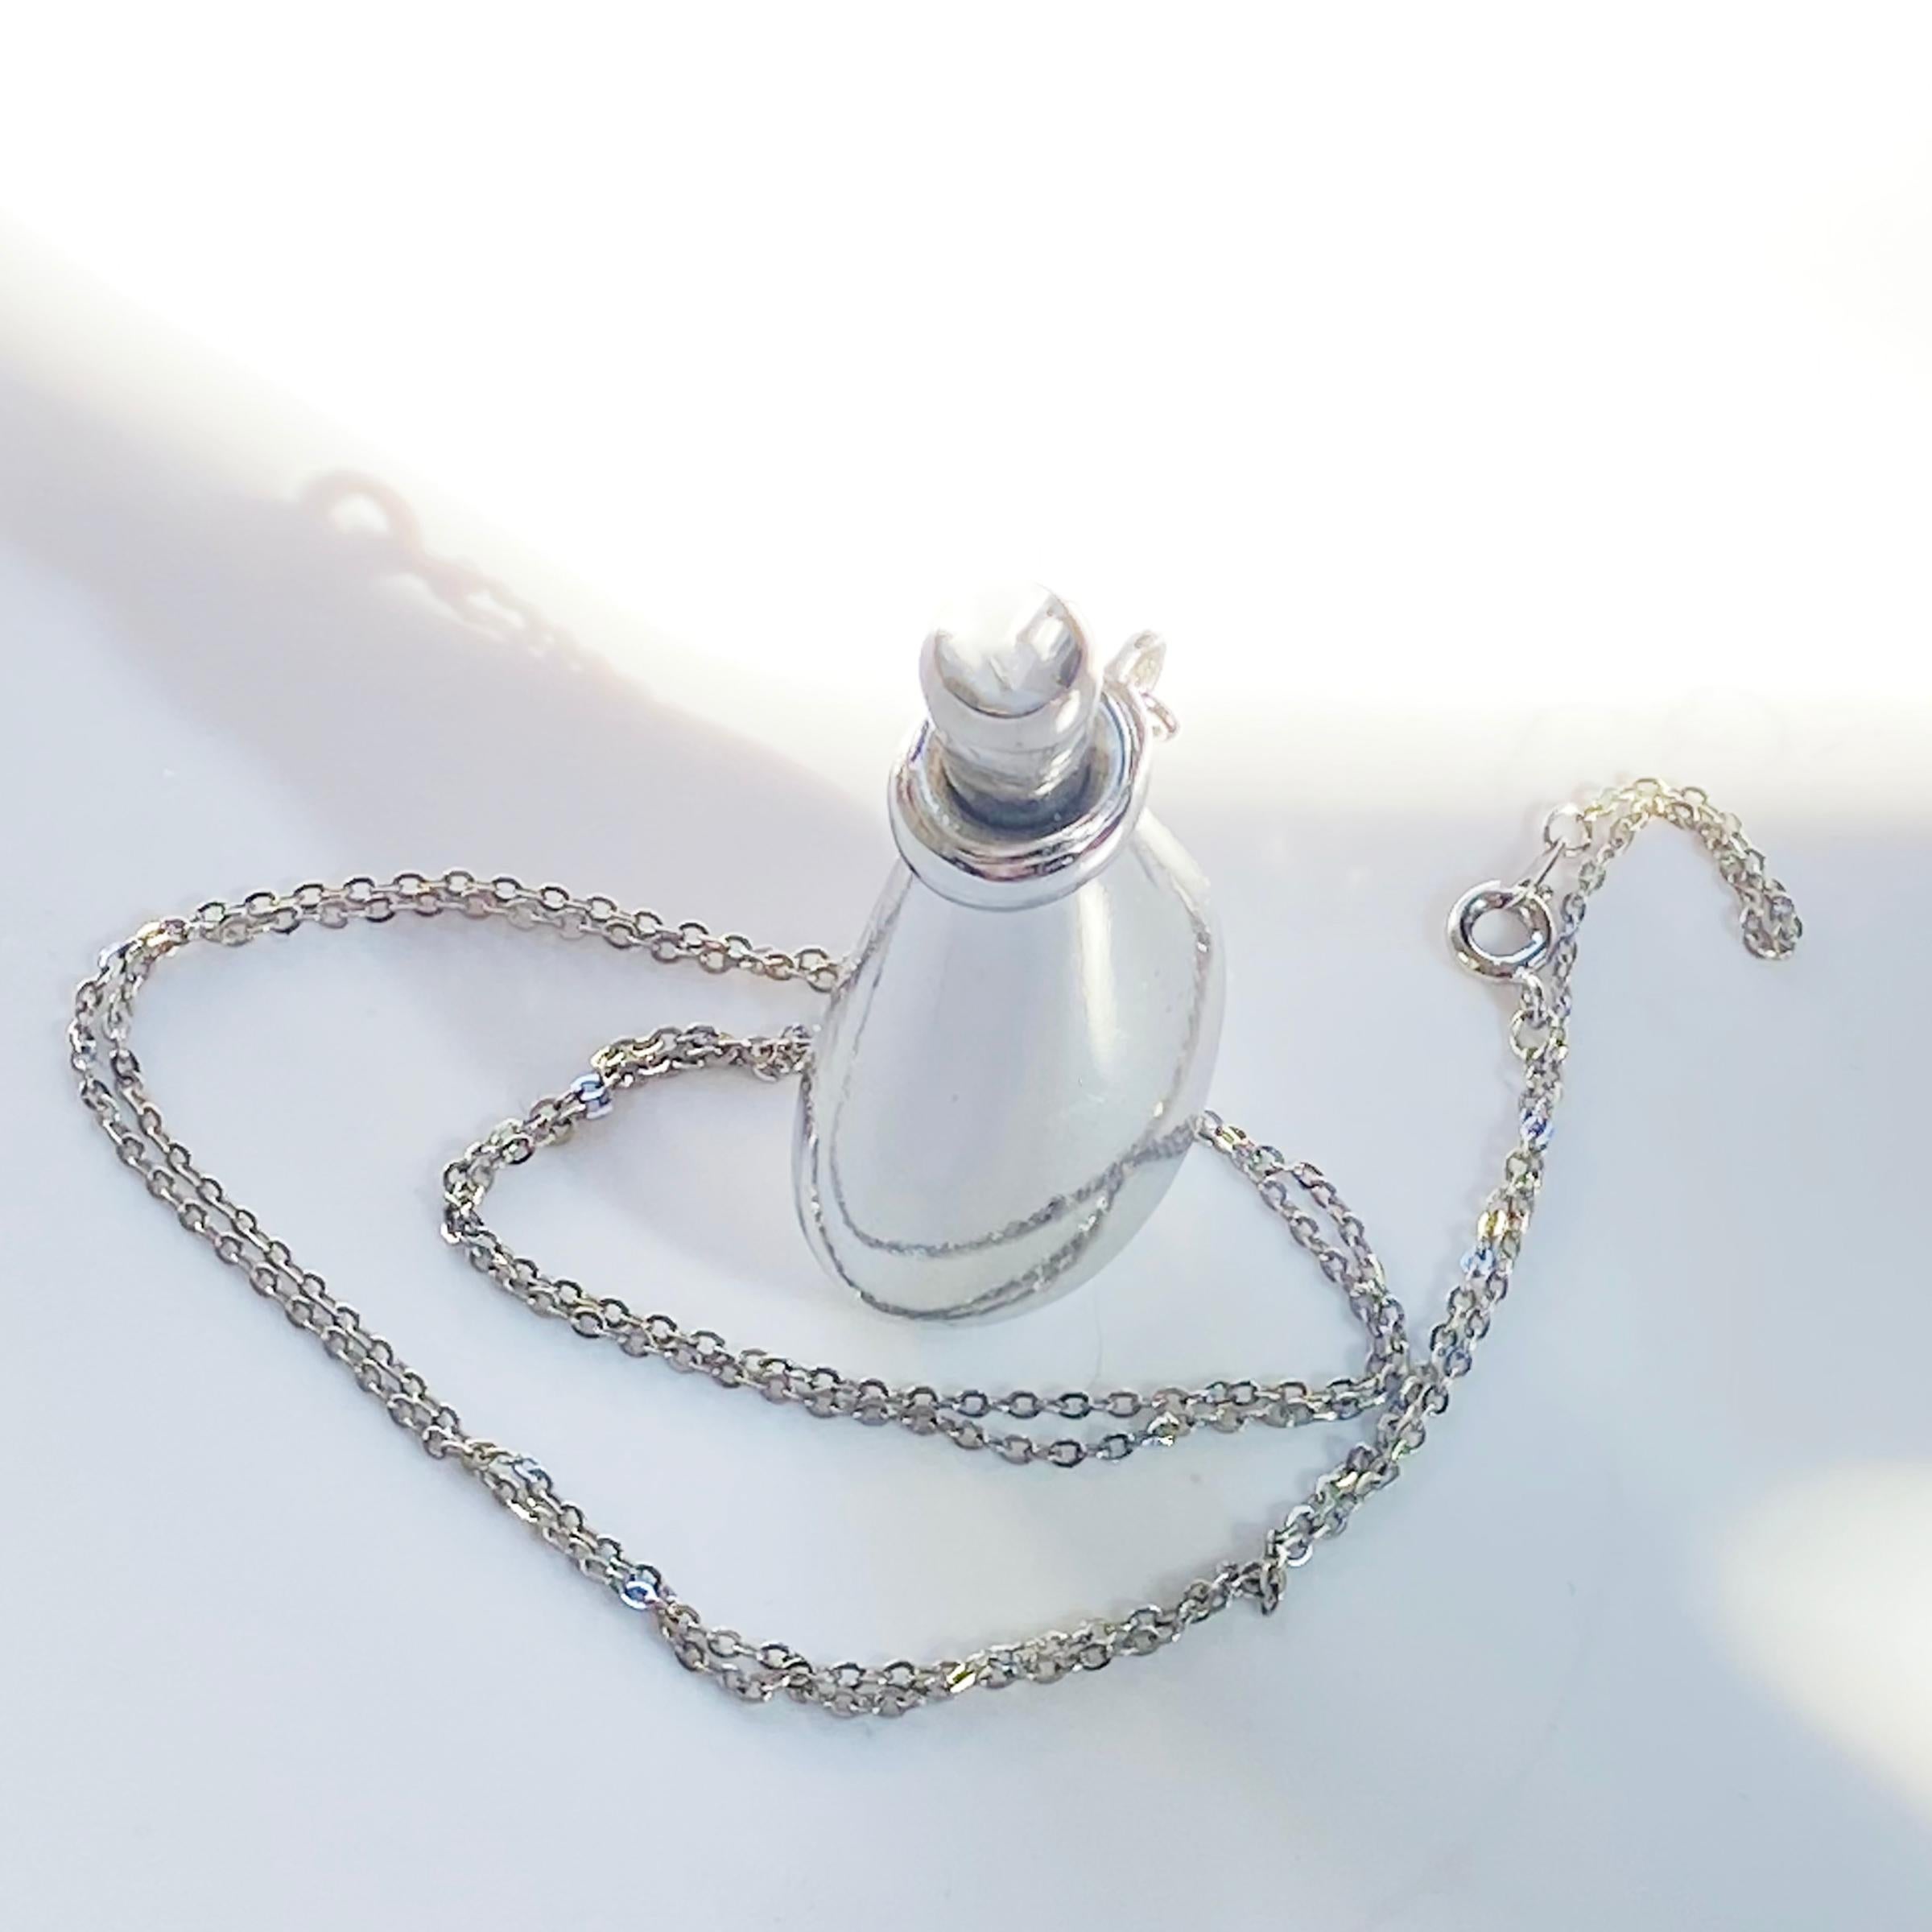 halston bottle necklace